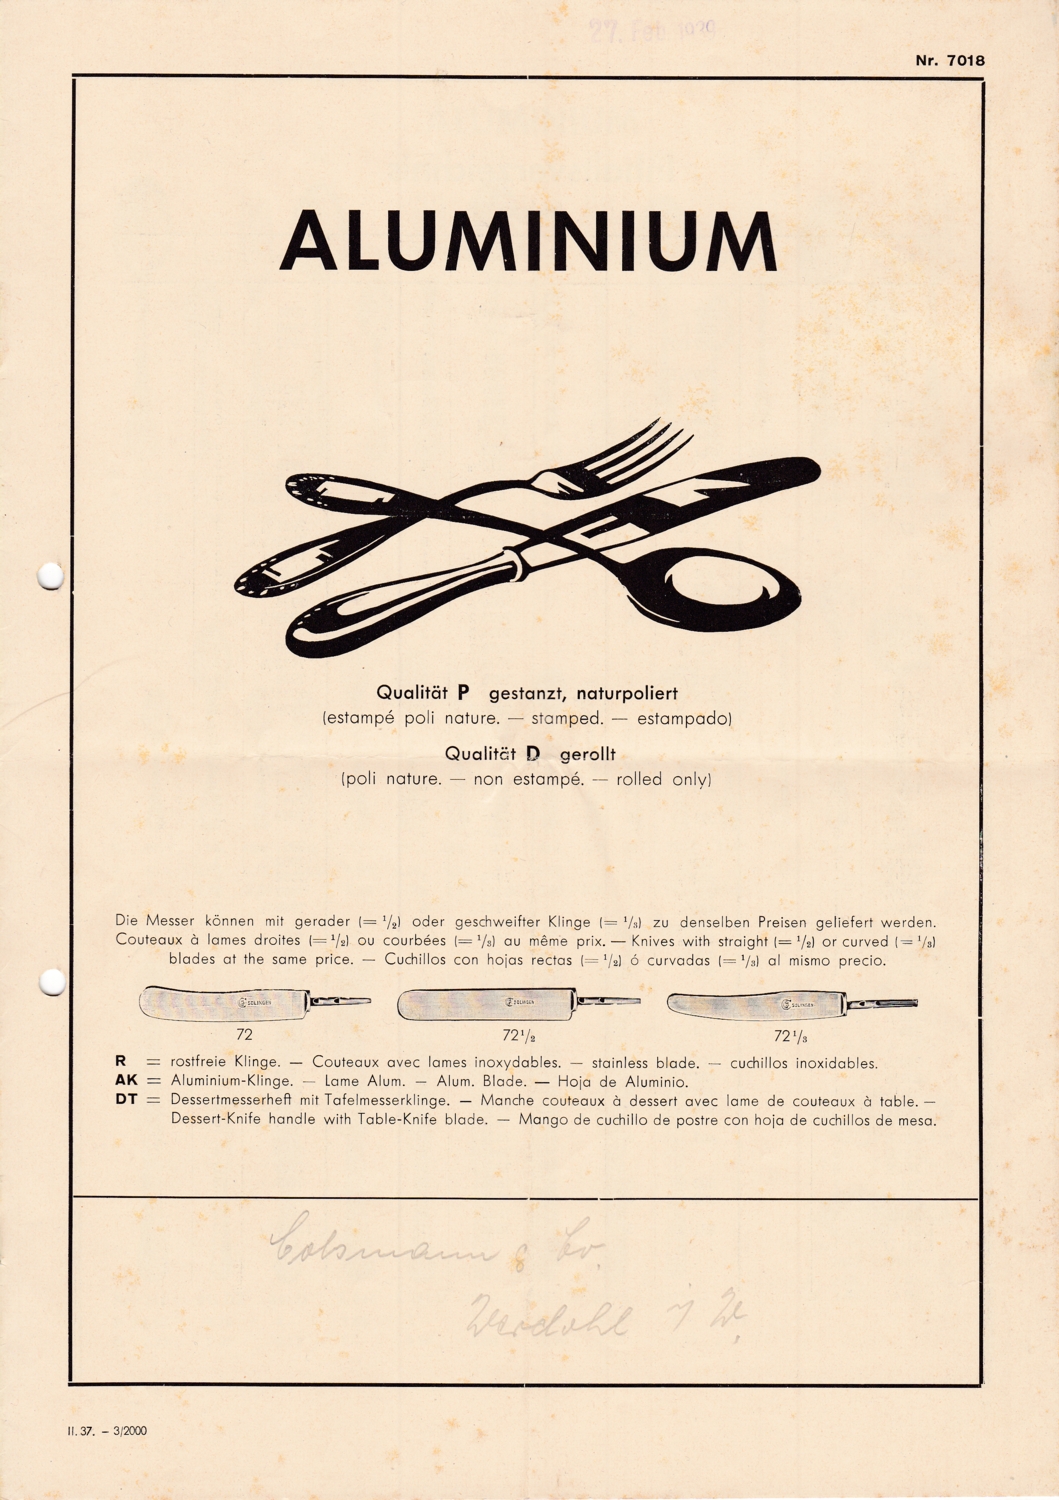 Preisliste für Aluminiumbestecke der Firma Colsman & Co., Werdohl, 1939 (M.-A. Trappe CC BY-NC-SA)